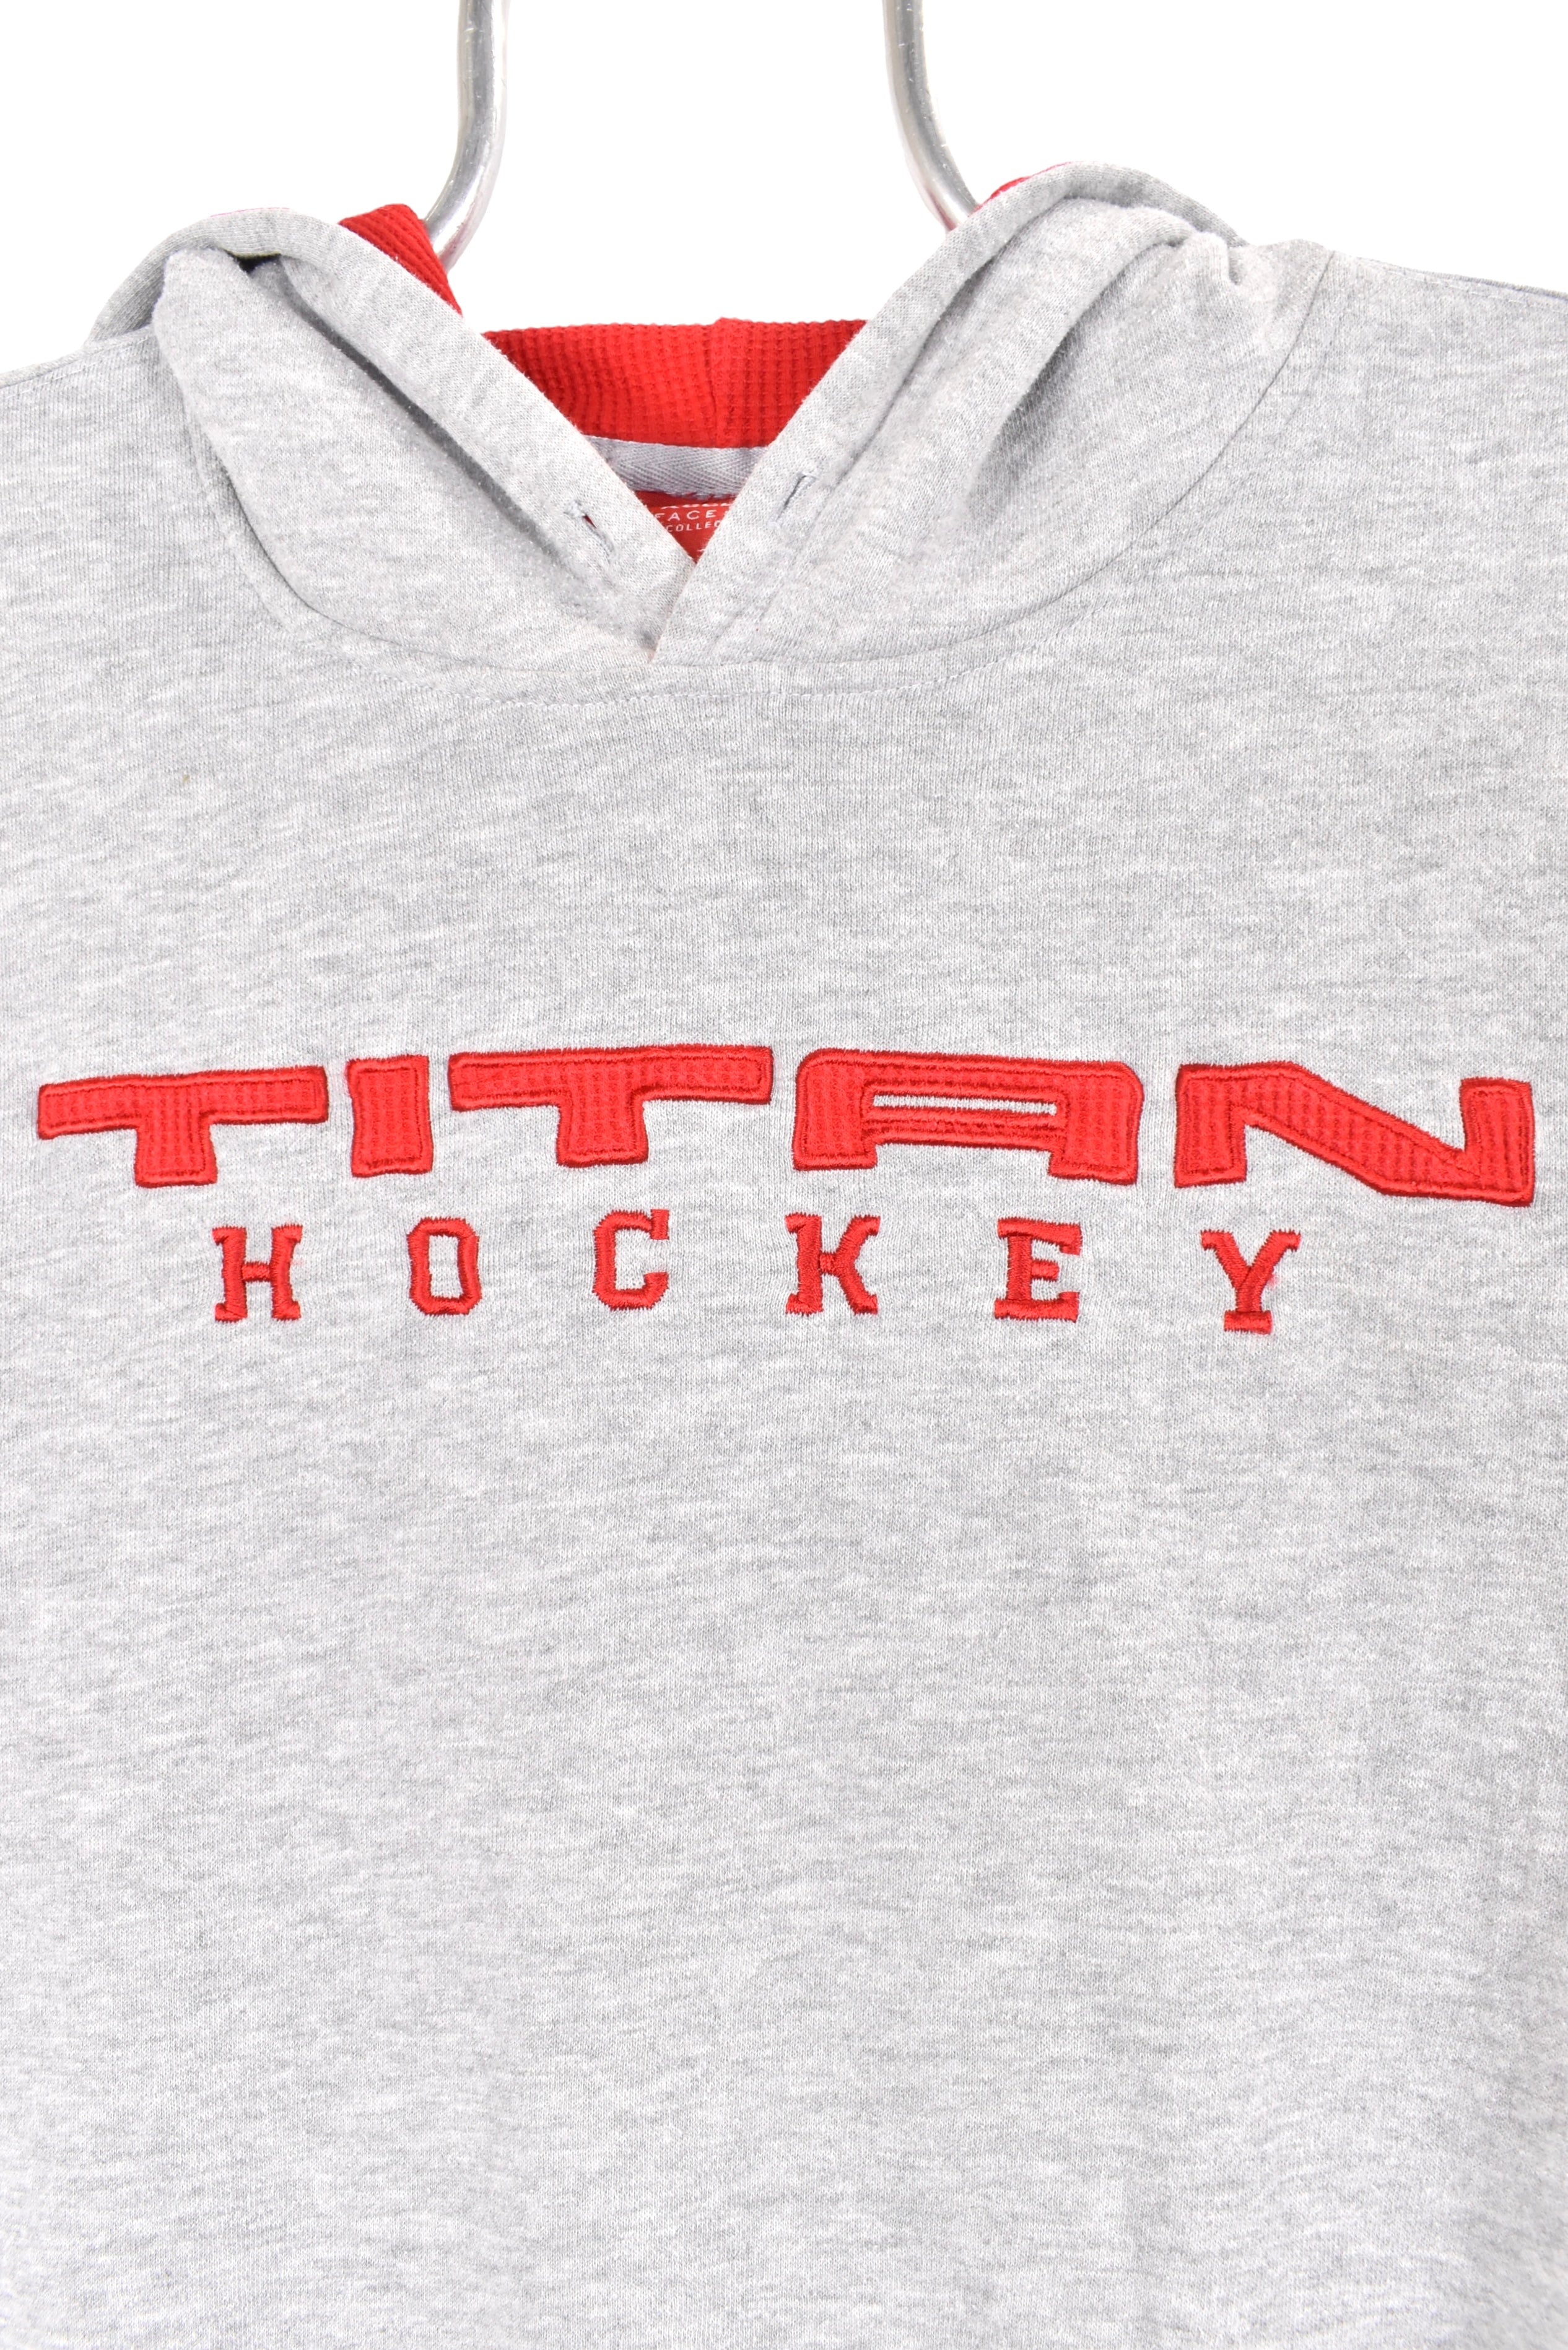 Vintage Titan hockey hoodie, Canadian grey embroidered sweatshirt - AU Medium PRO SPORT